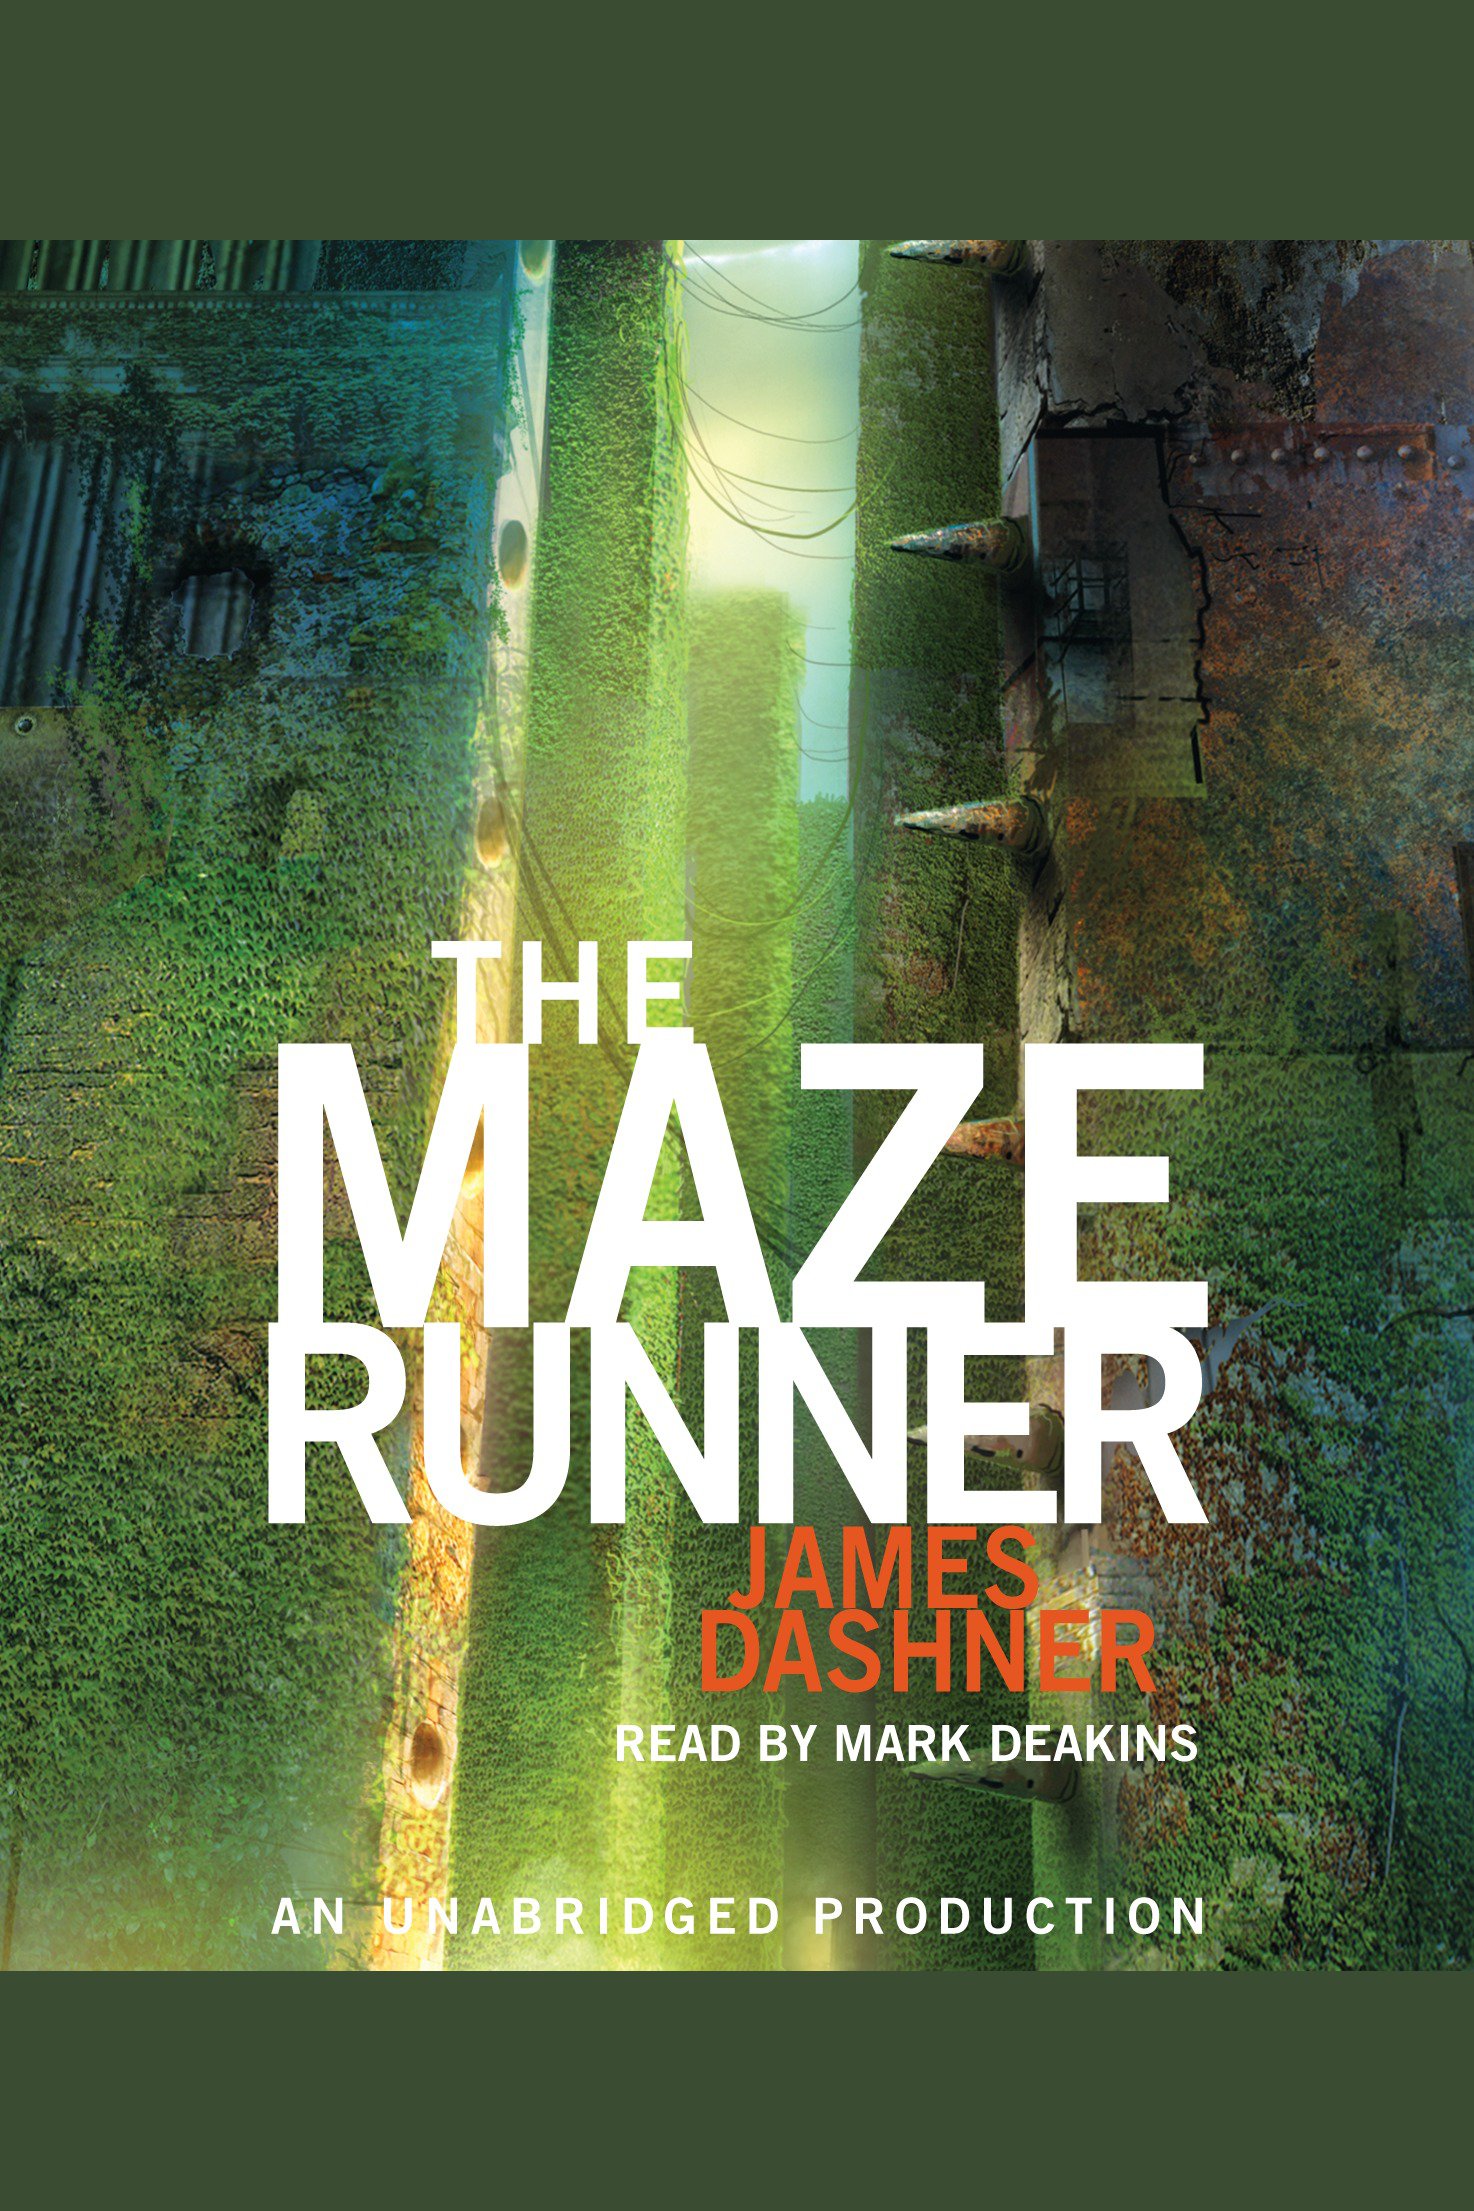 The maze runner cover image